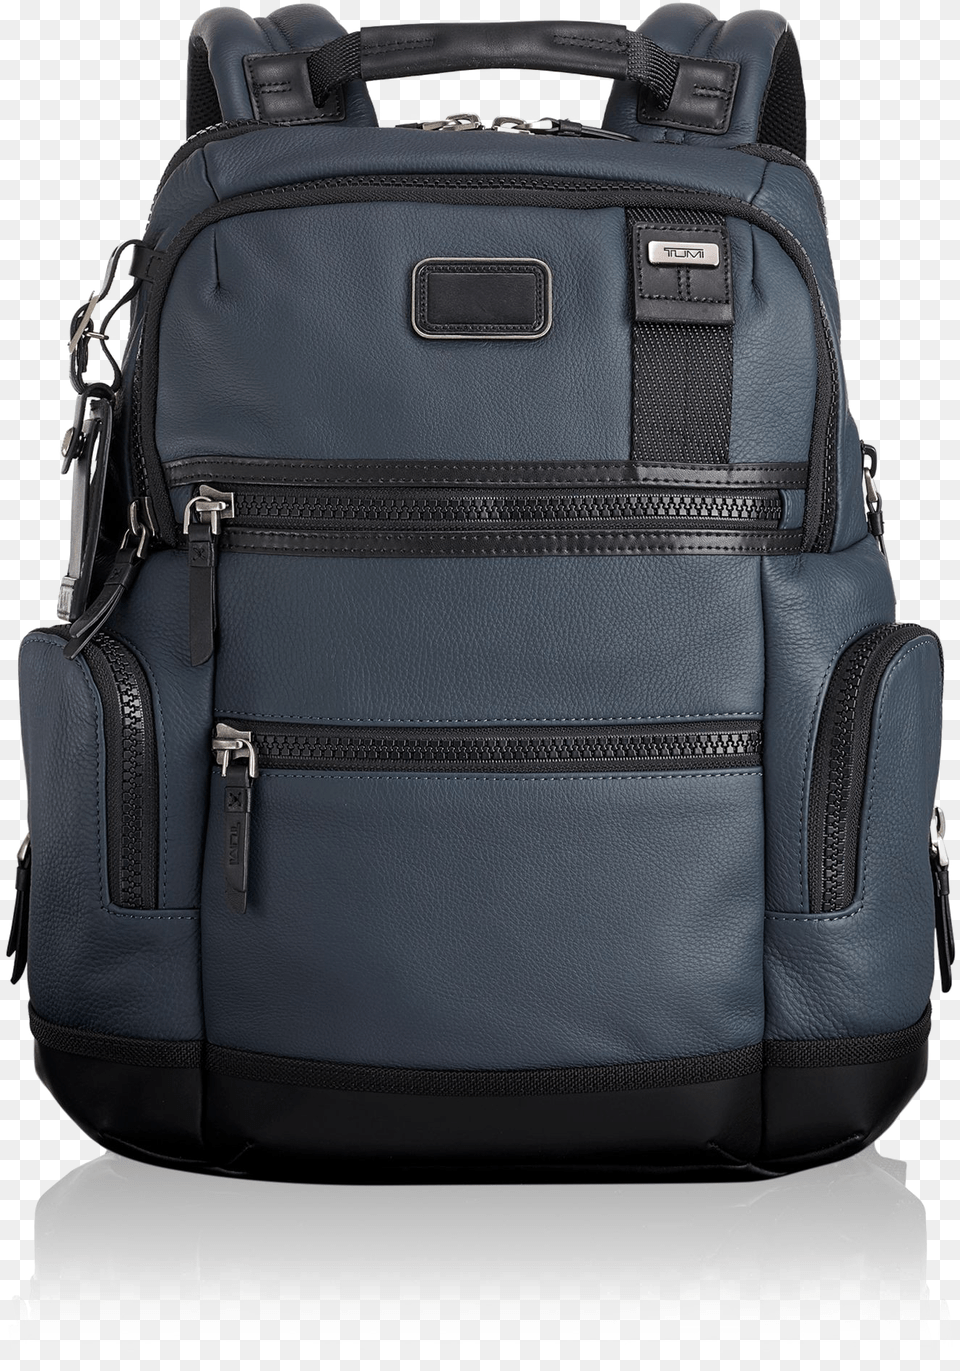 Backpack Free Download Backpack White Background, Bag, Accessories, Handbag Png Image